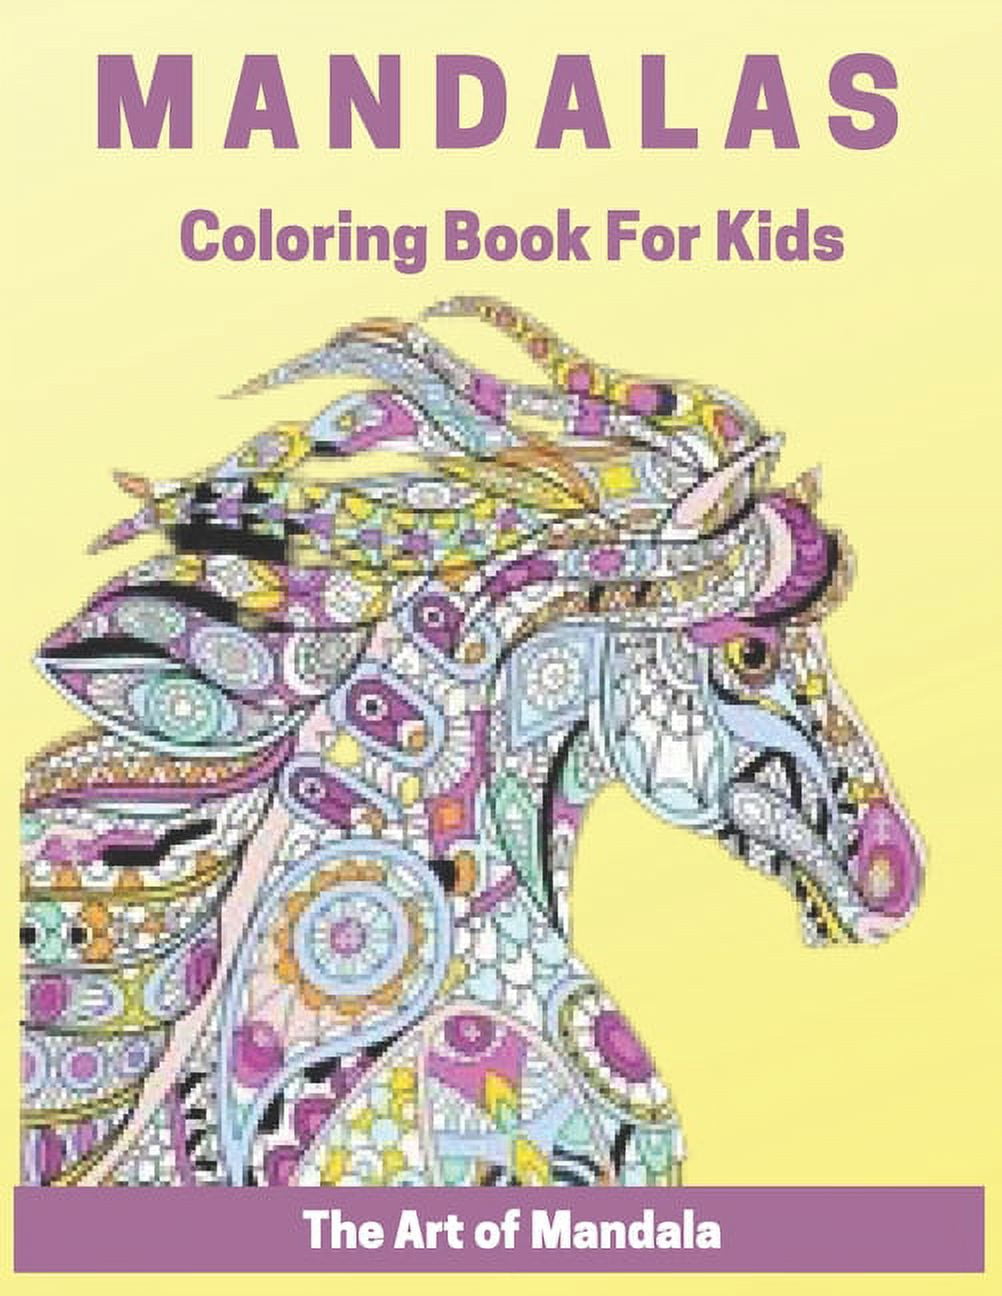 Mandala Adult Coloring Books by Colorya - A4 Size - Mandalas